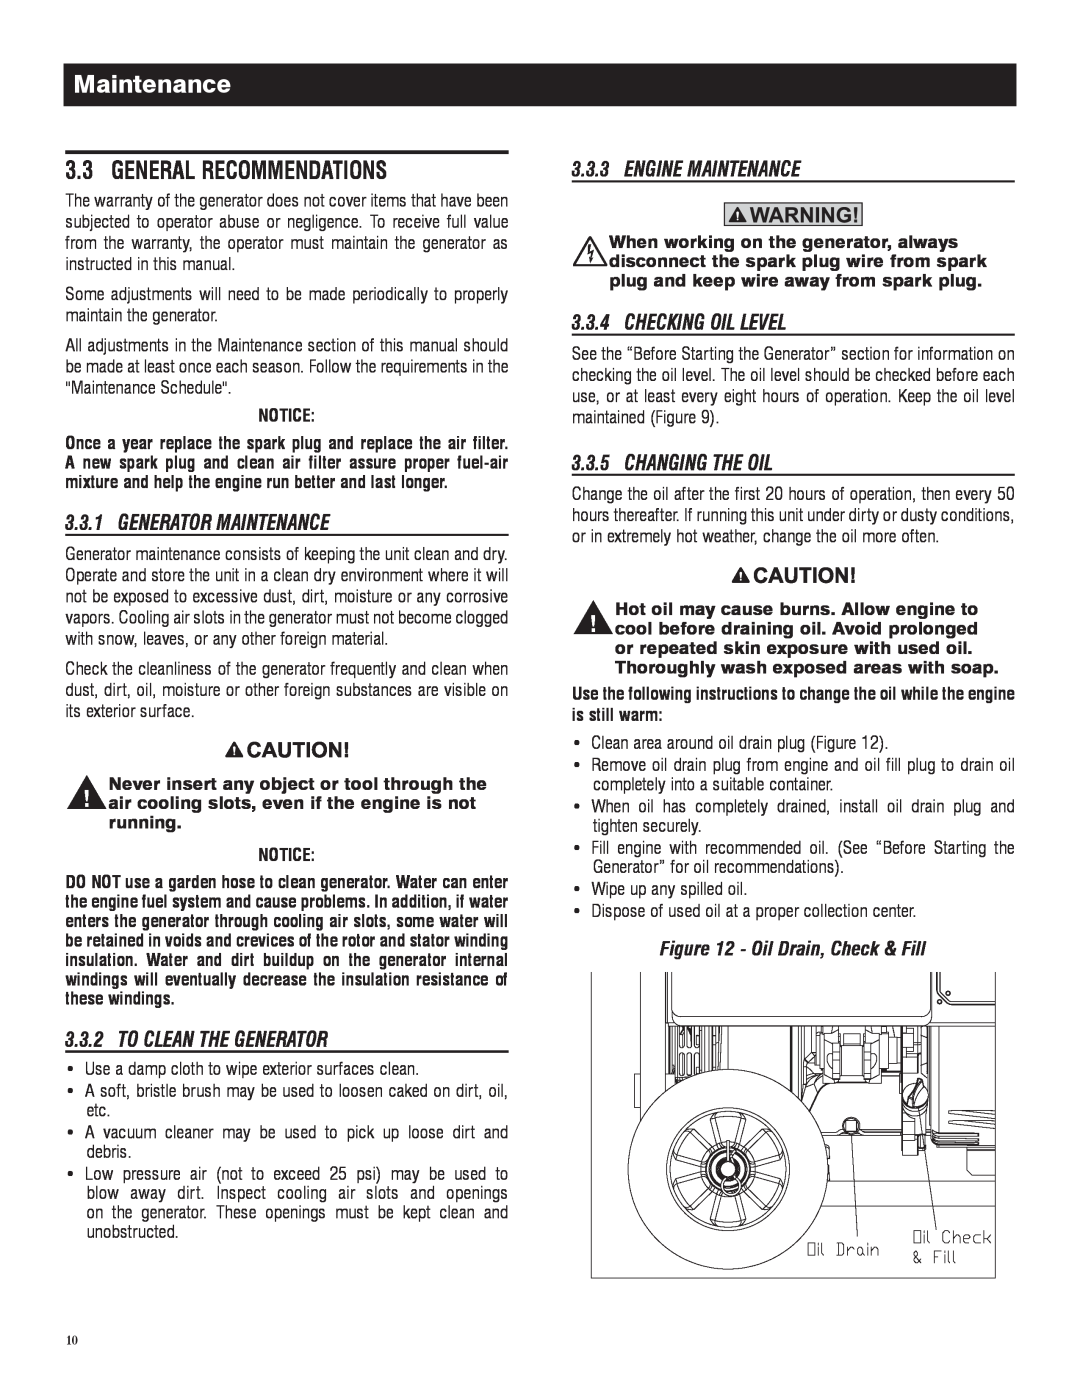 Generac 005982-0, 5982R General Recommendations, Generator Maintenance, To Clean The Generator, Engine Maintenance 